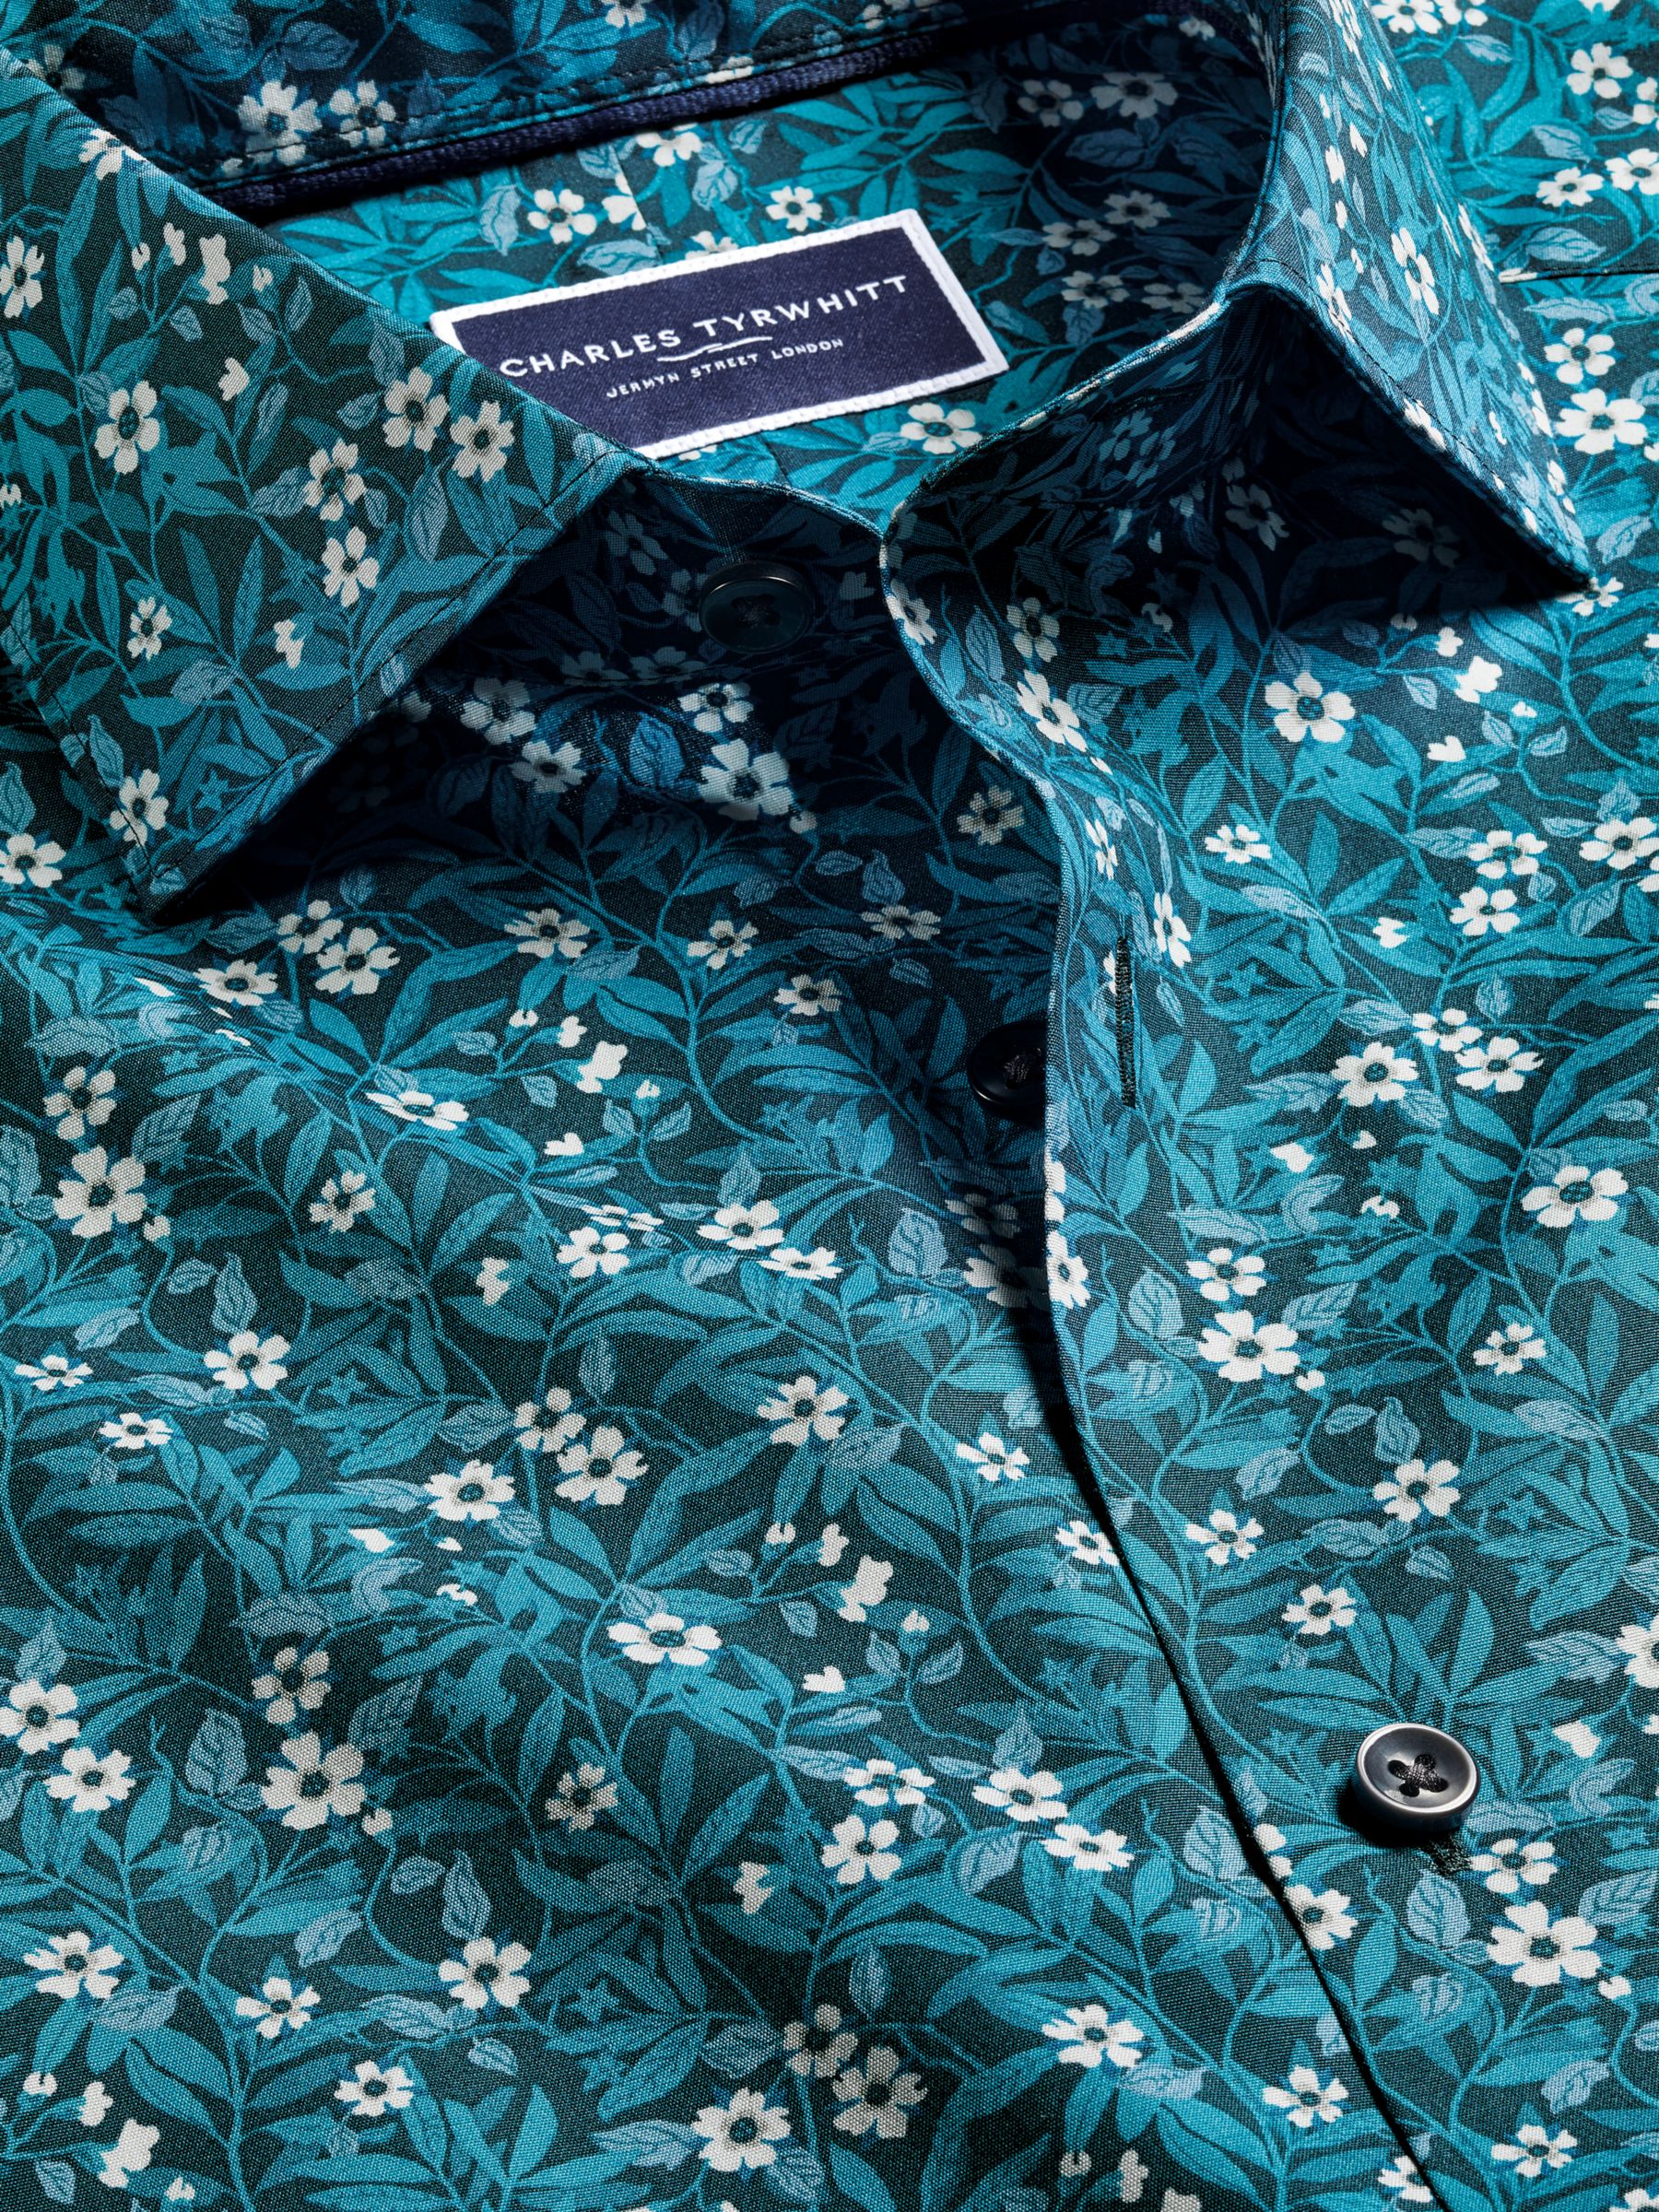 Buy Charles Tyrwhitt Classic Fit Floral Liberty Print Shirt, Atlantic Green Online at johnlewis.com